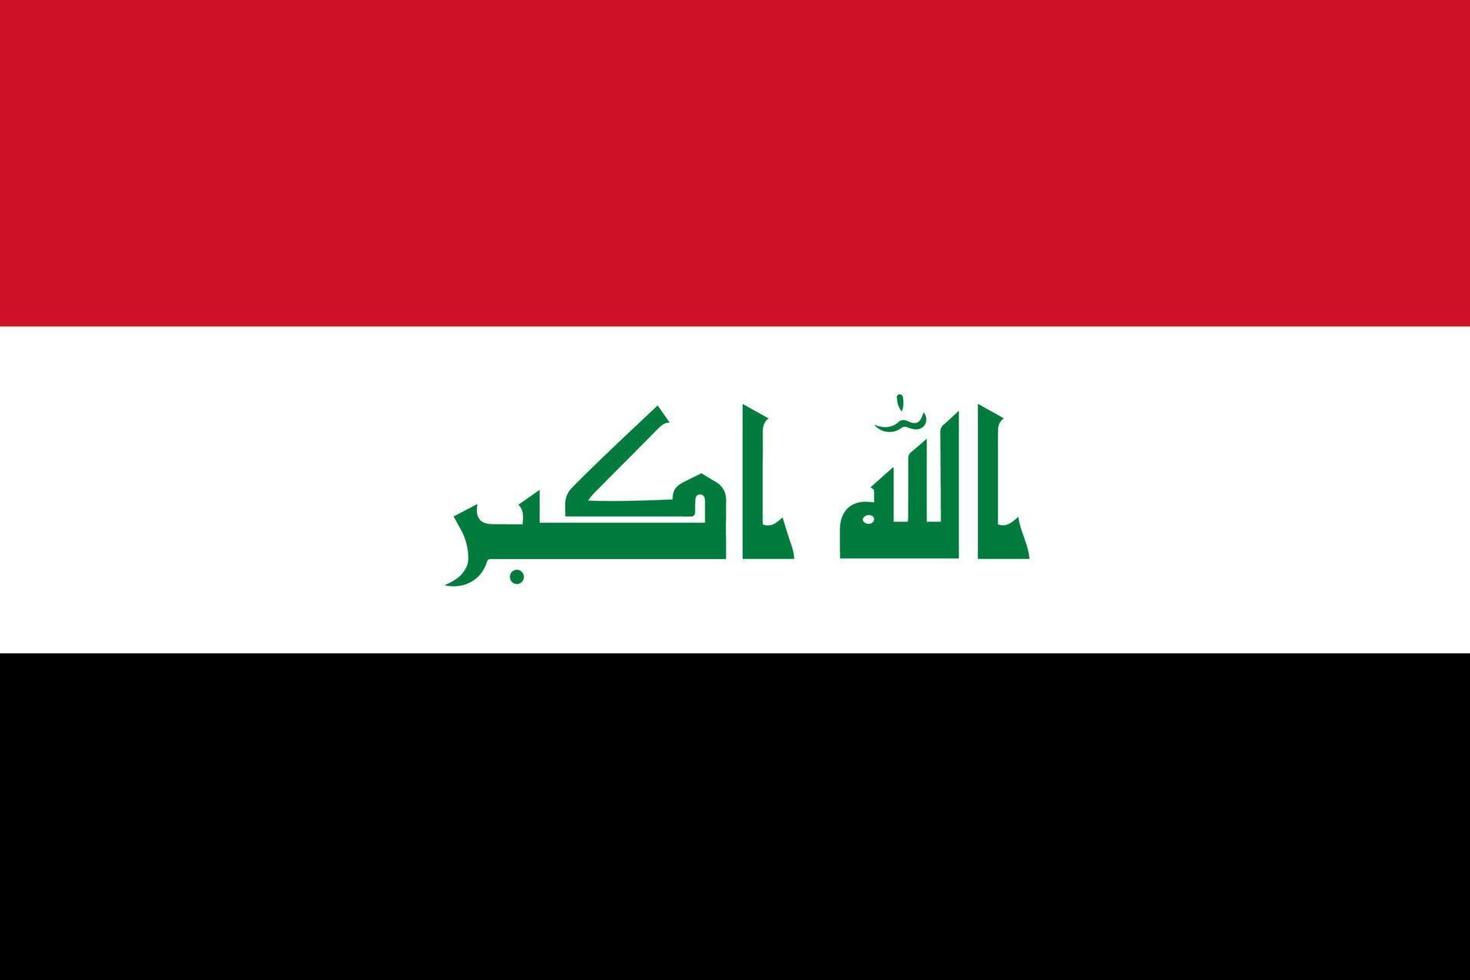 Iraq flag standard size in asia. Vector illustration